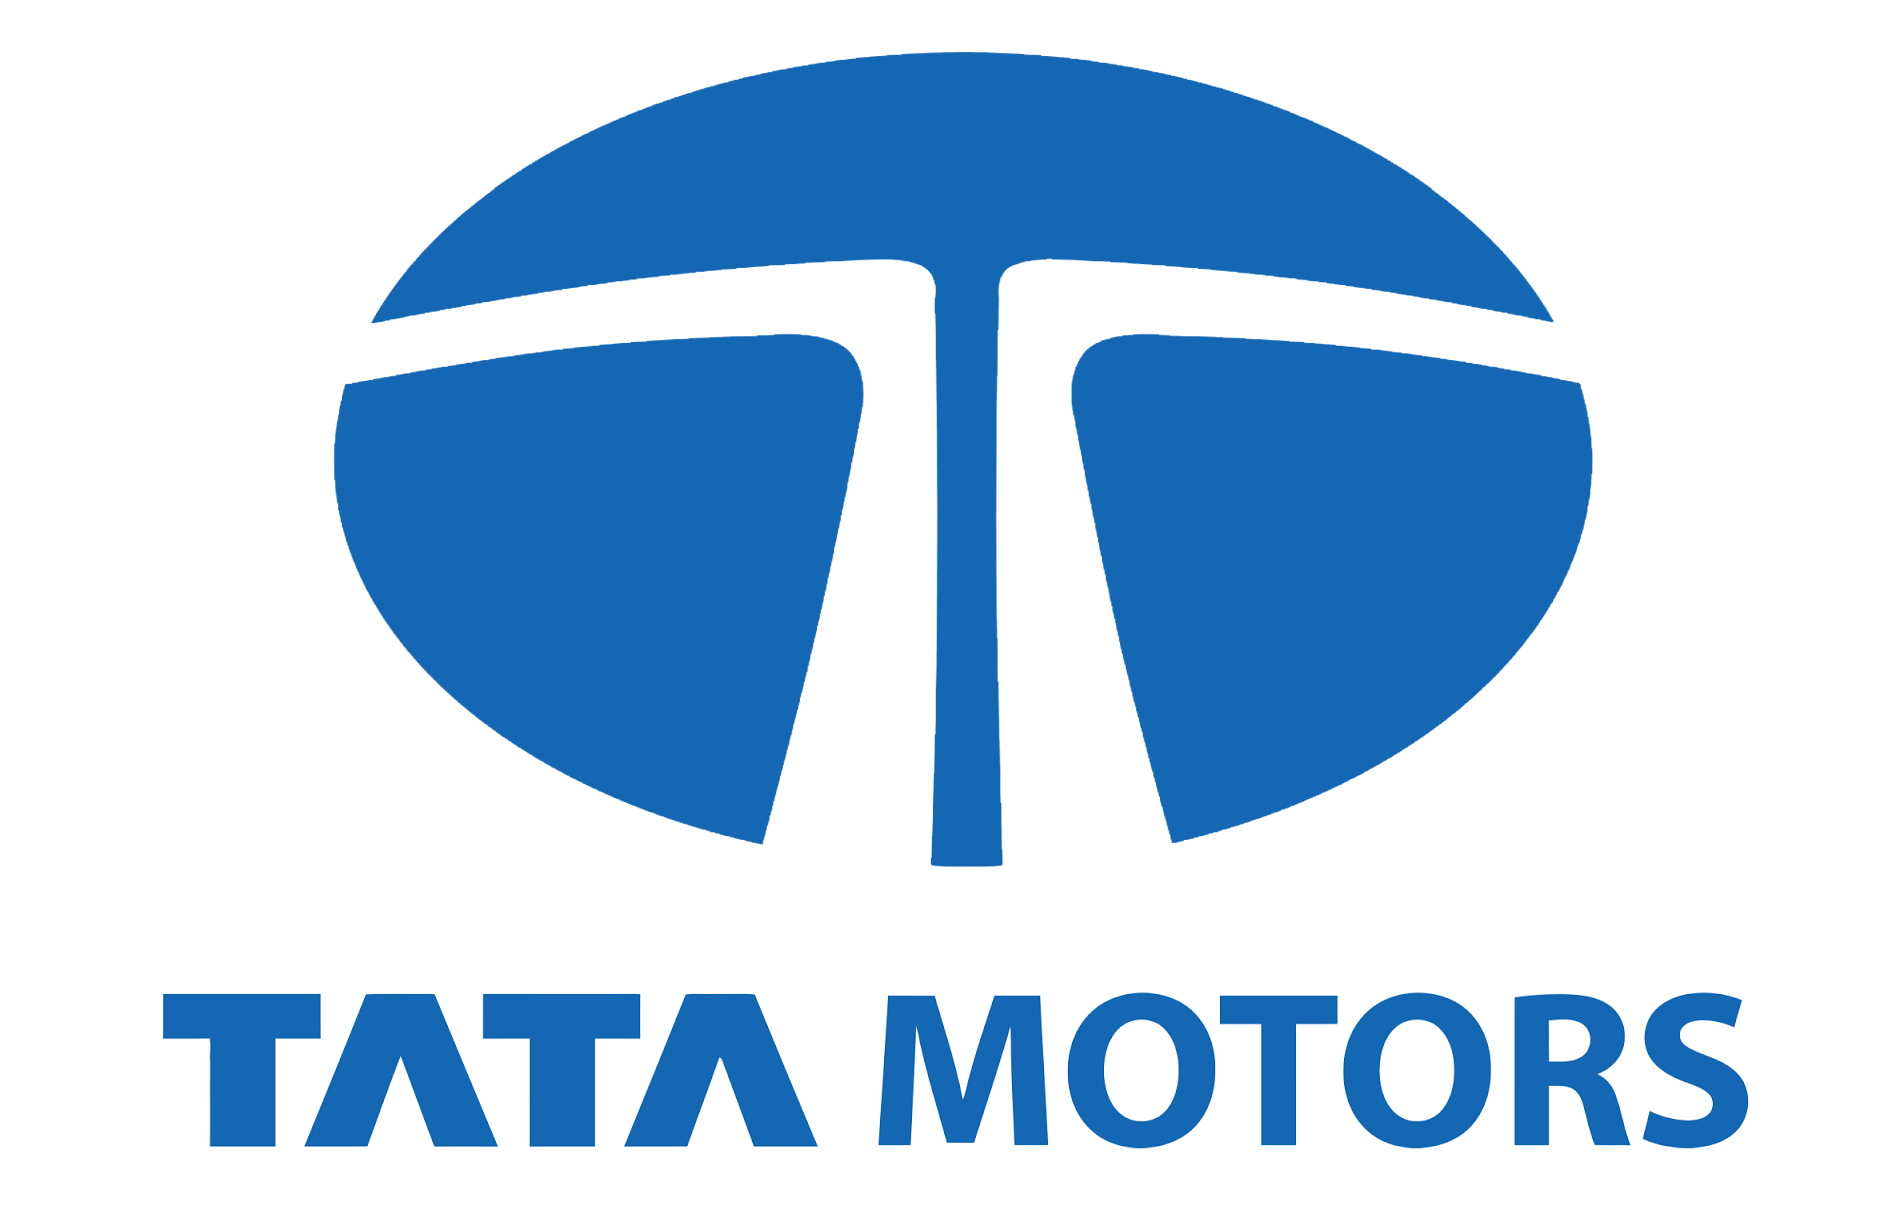 Tata Motors Cars Showroom - Schakralaya Motors Pvt Ltd - Logo